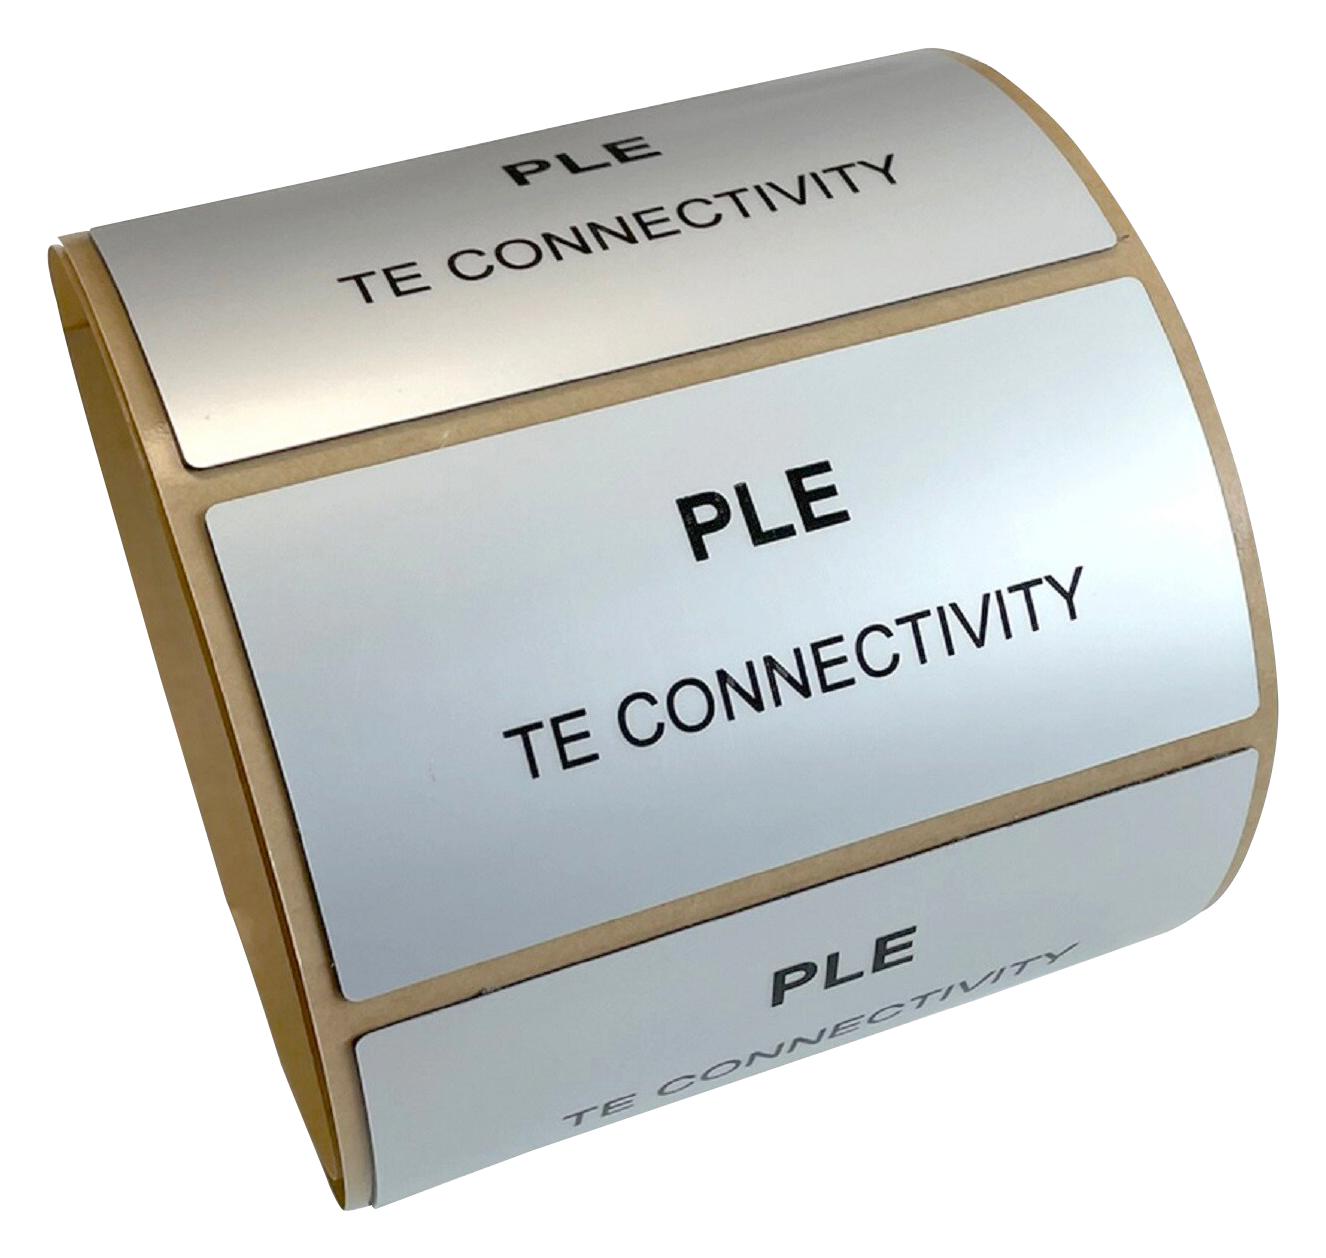 Entrelec TE Connectivity Ple-030008-Wh-1 Label, Polyester, White, 30mm X 8.8mm